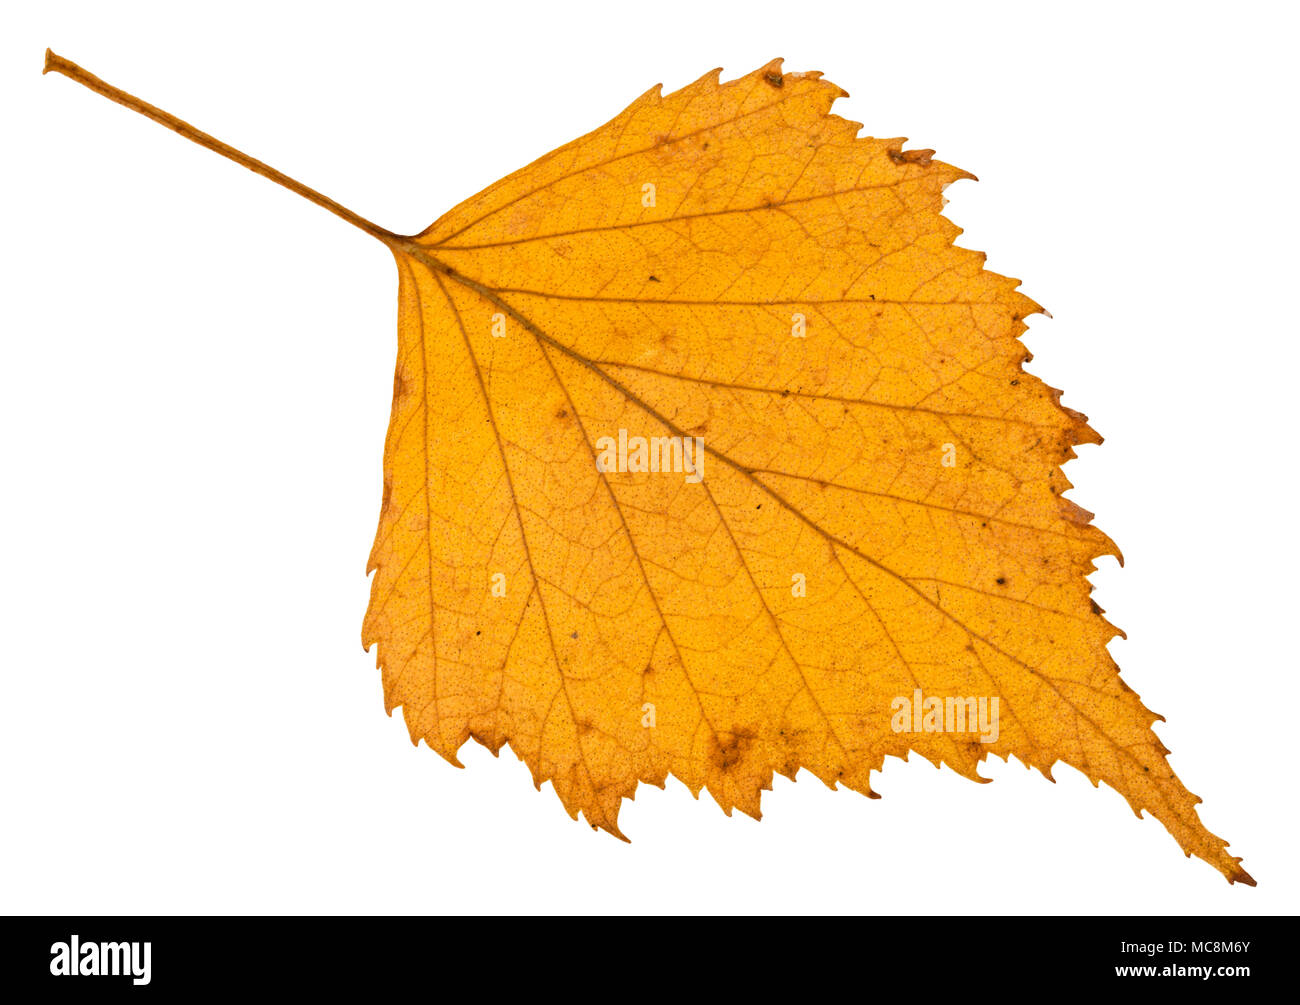 fallen autumn yellow leaf of birch tree isolated on white background Stock Photo